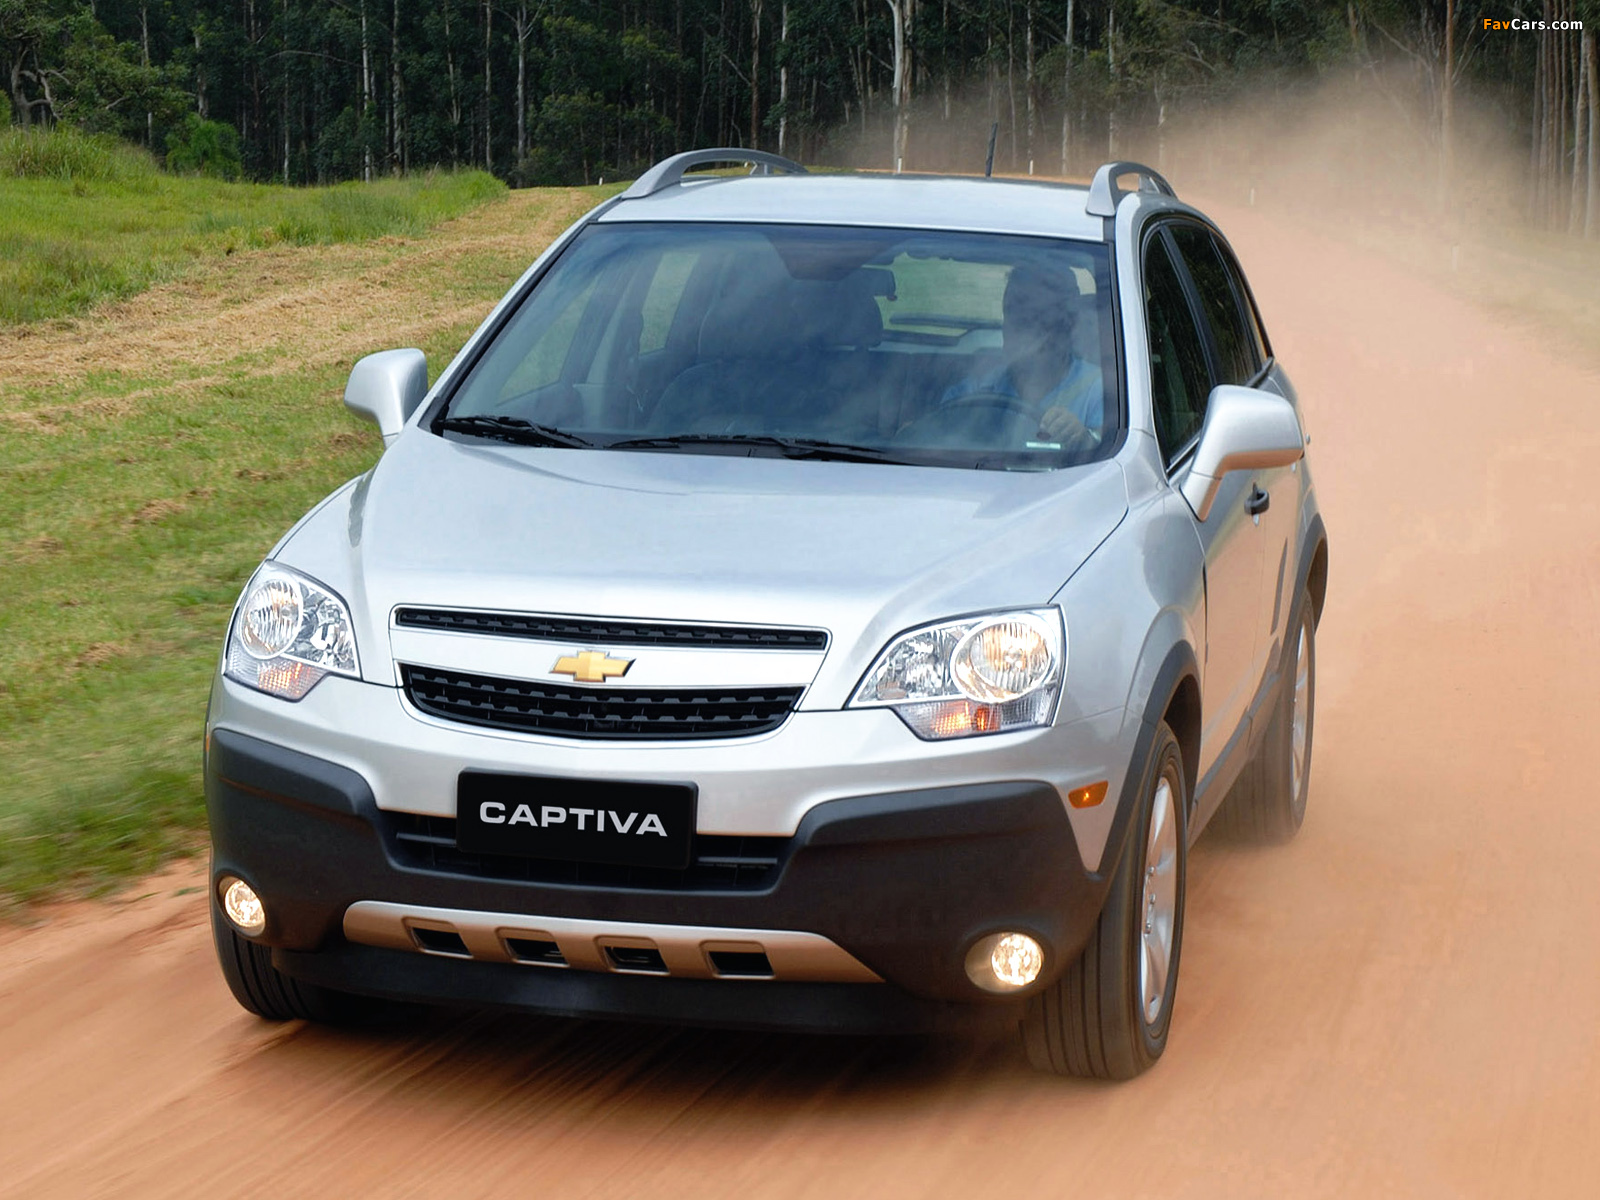 Pictures of Chevrolet Captiva BRspec 2008 (1600x1200)